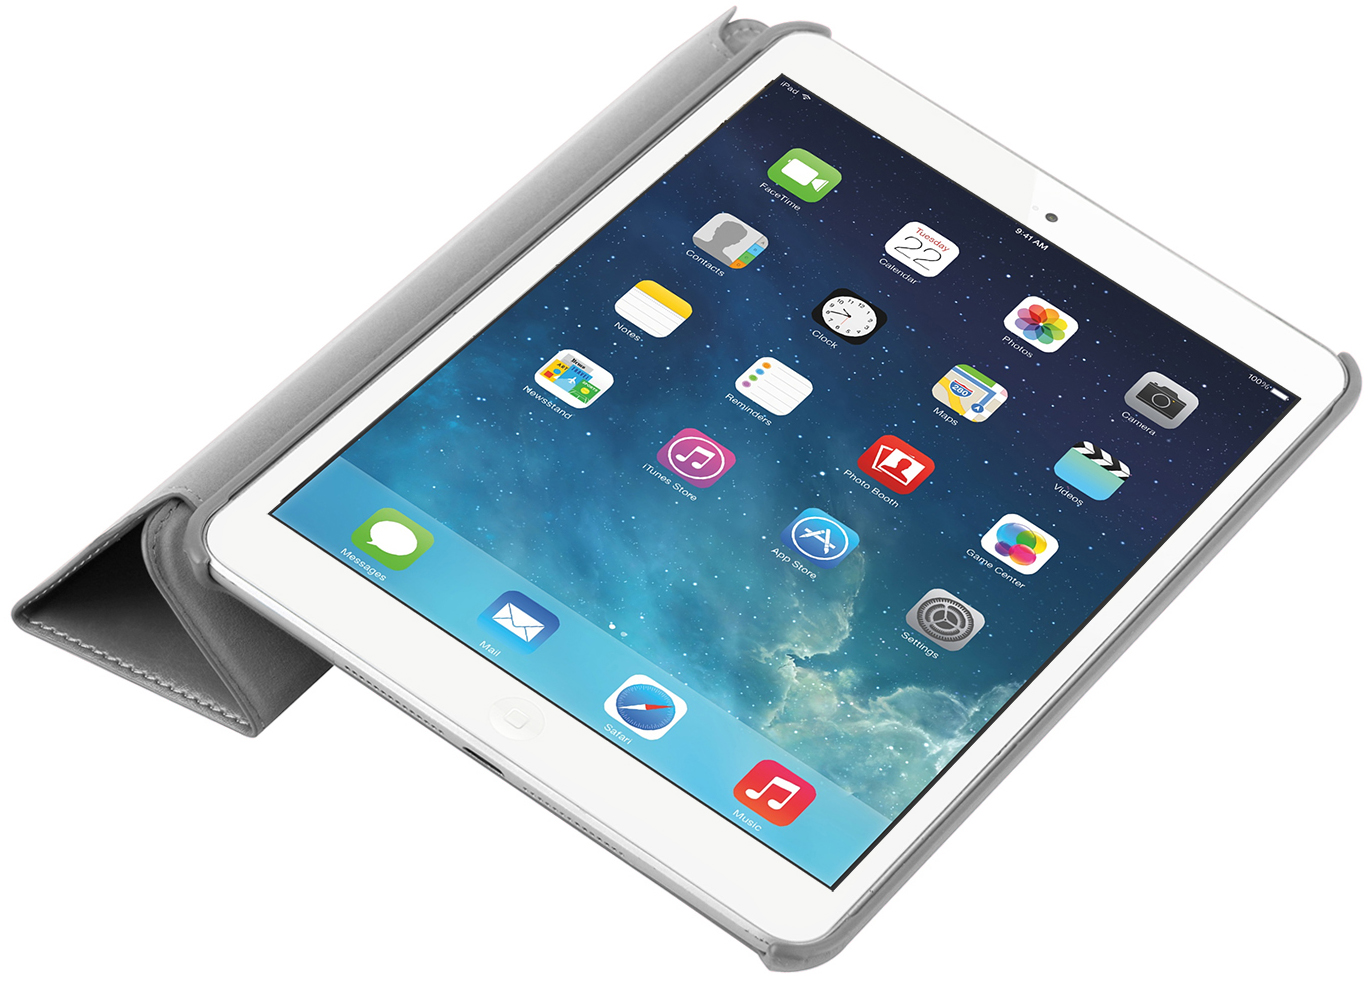  G-Case Slim Premium для iPad iPad mini 3 Silver